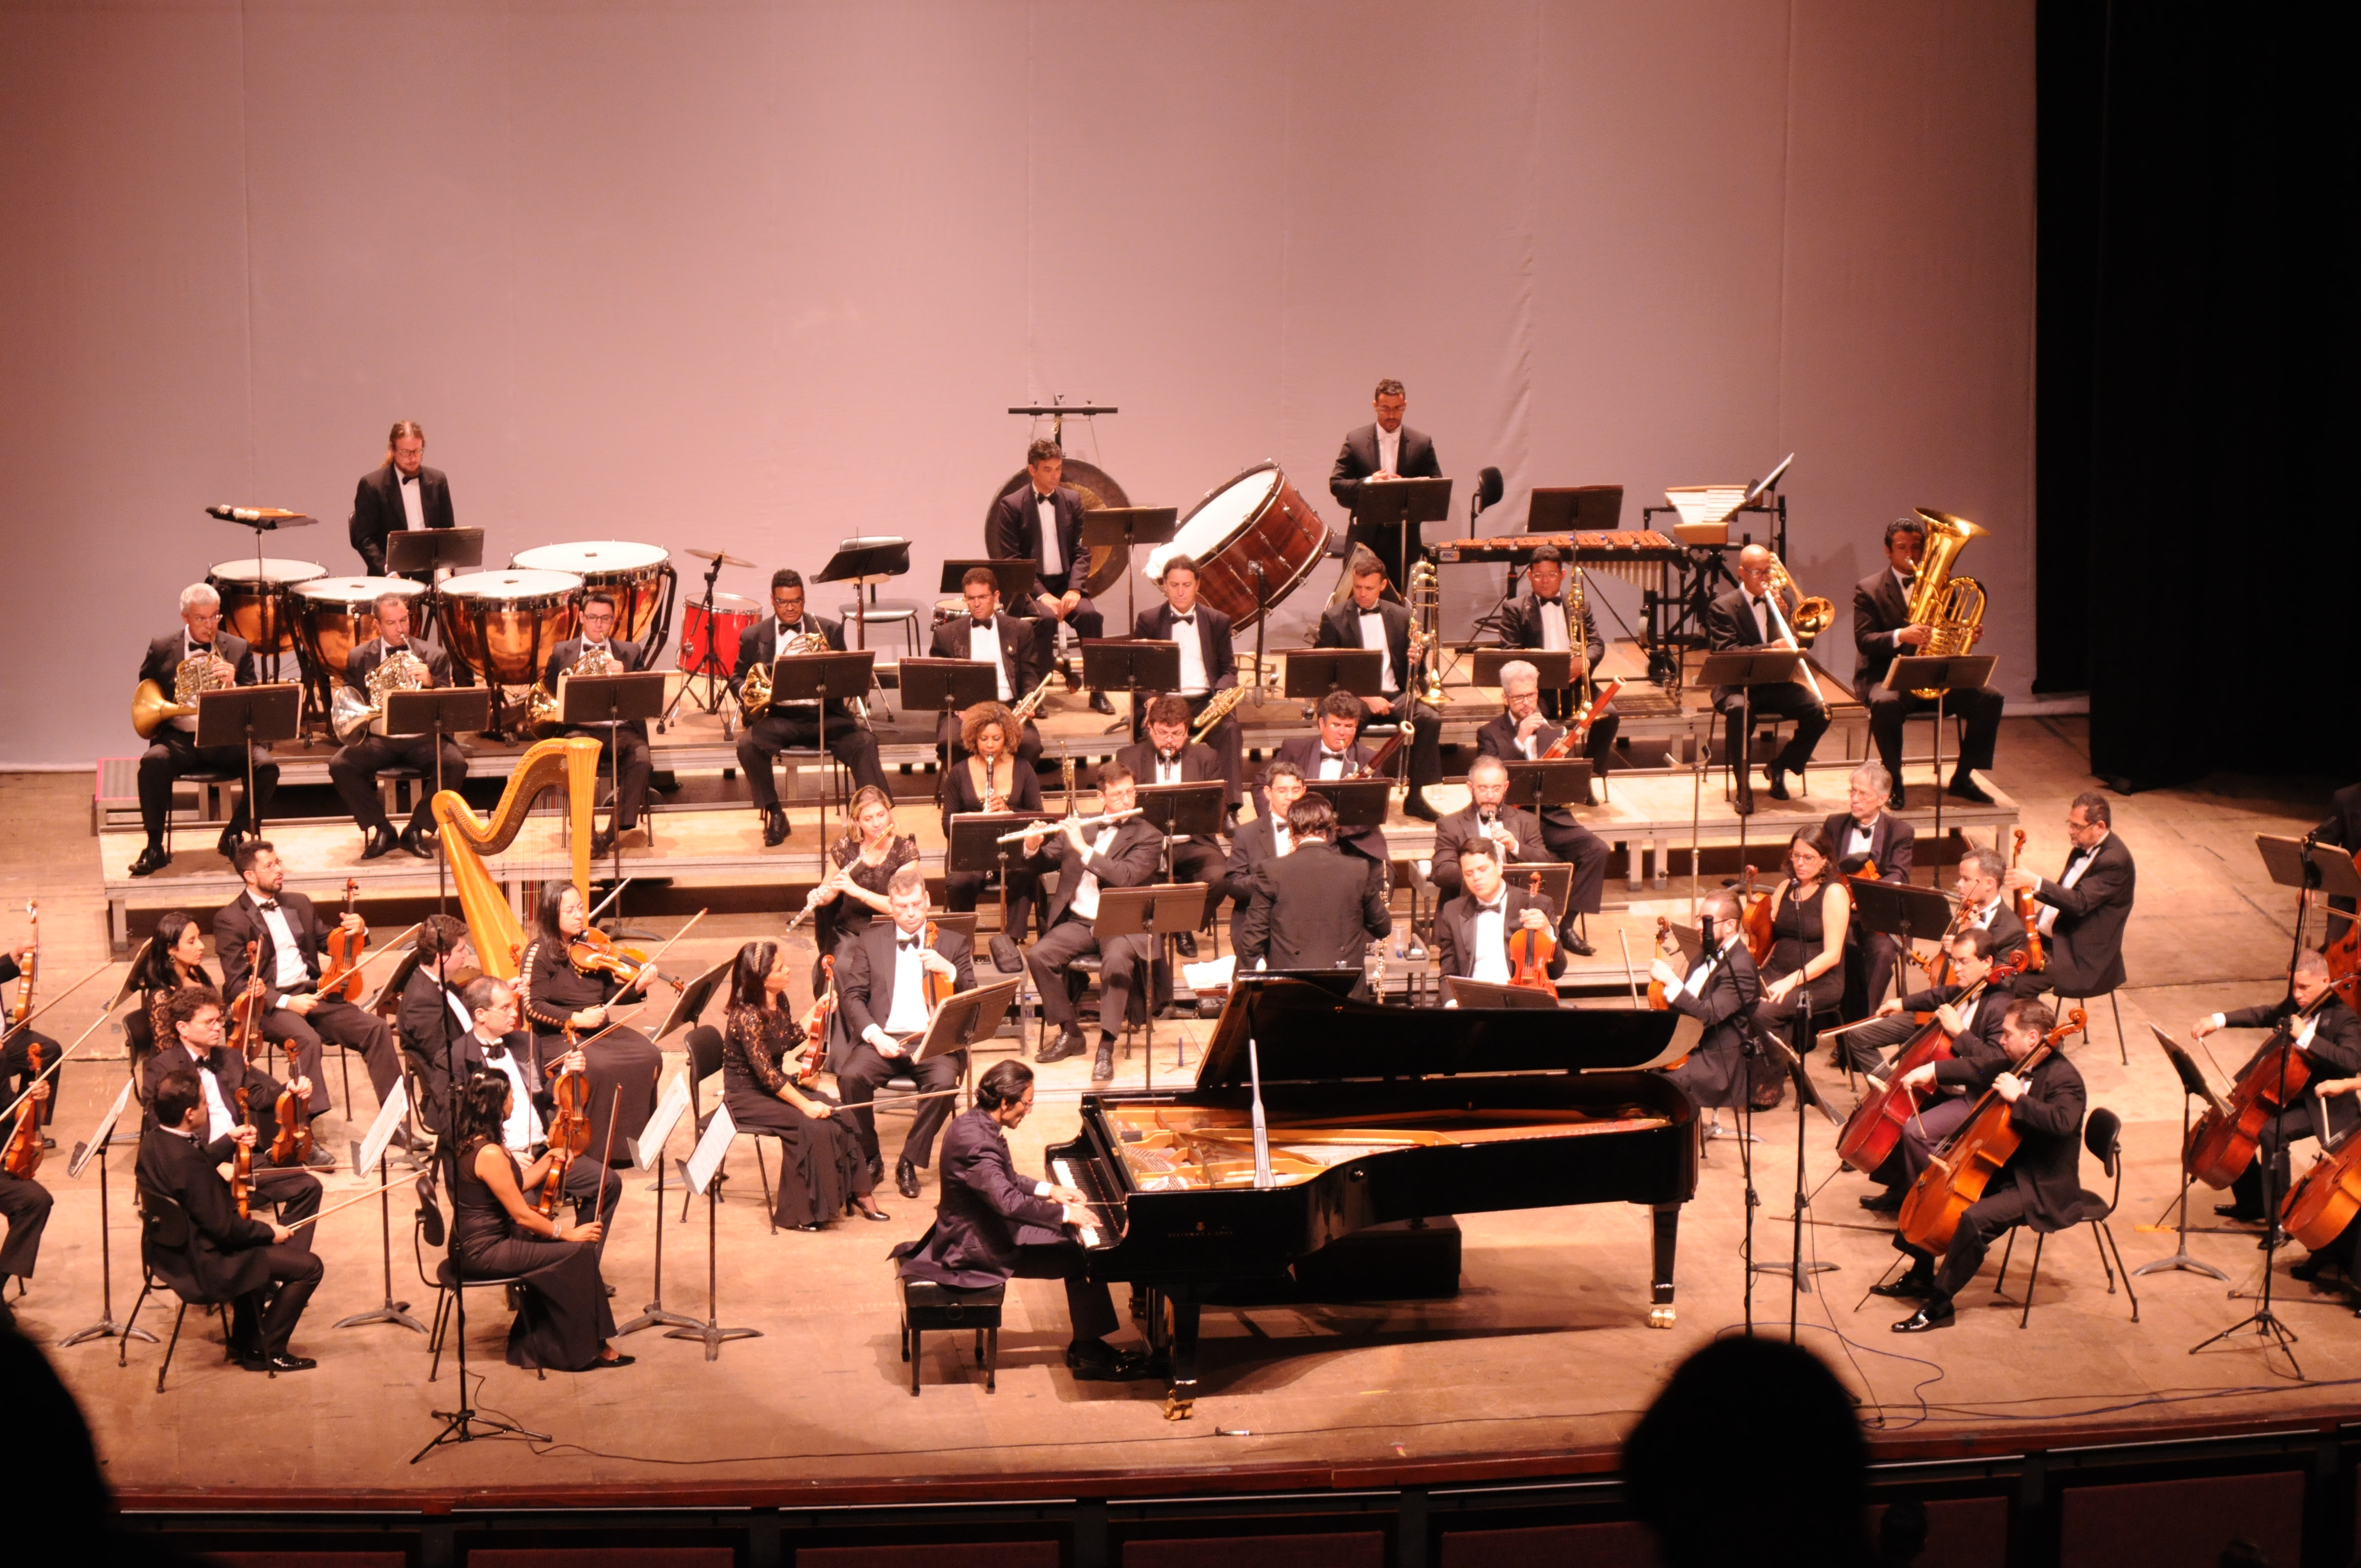 Concerto de Siviero com Orquestra do Teatro Nacional emociona curitibanos